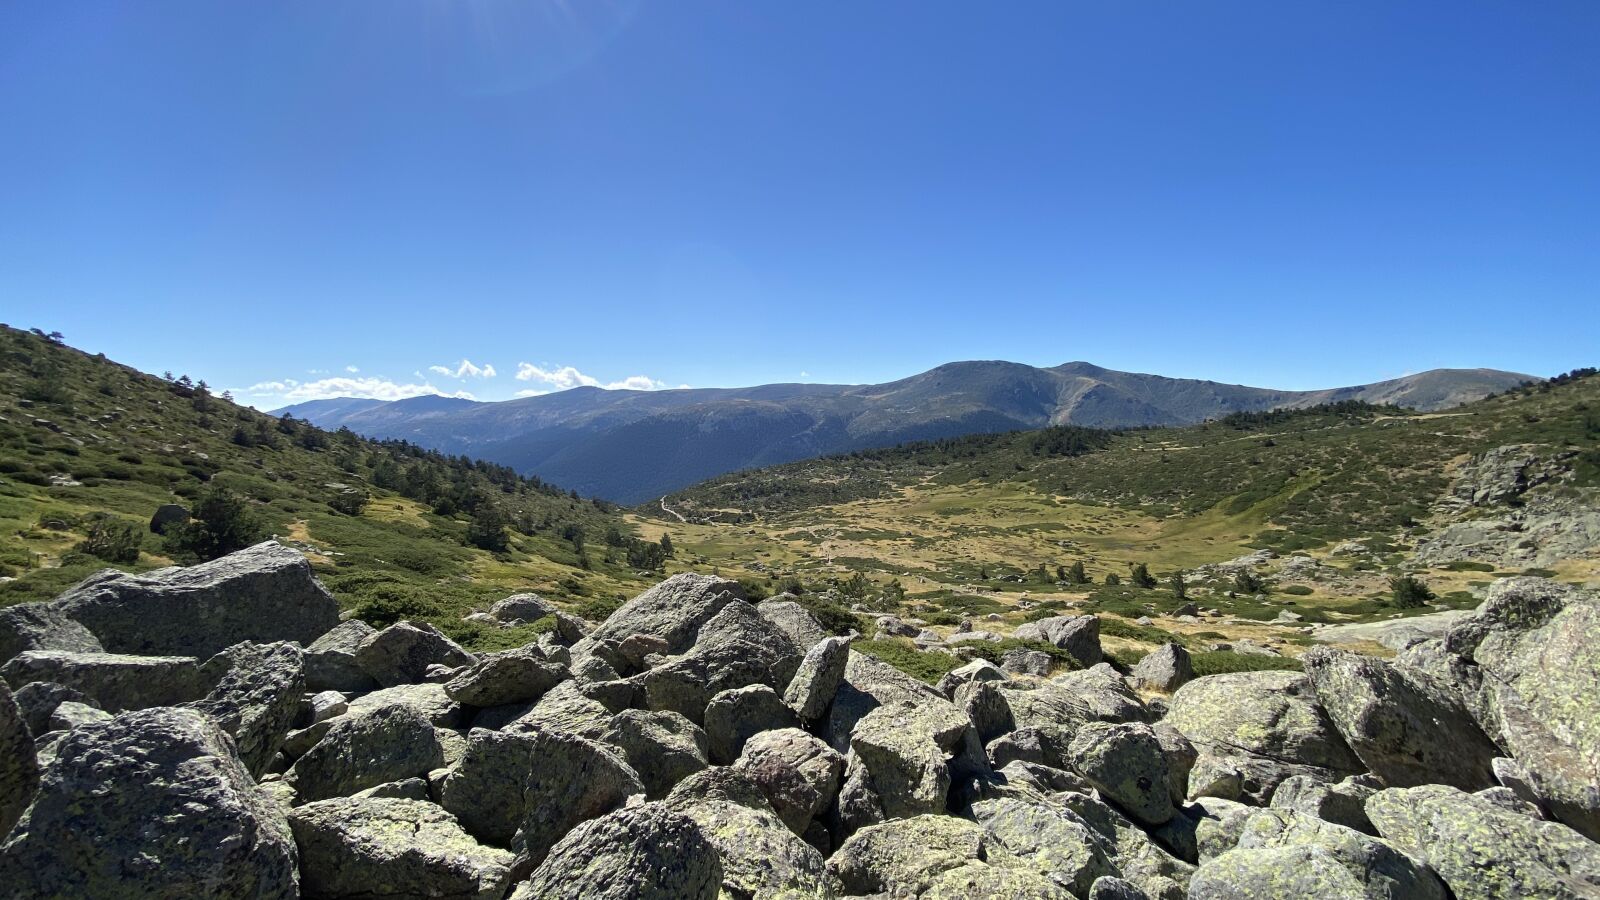 iPhone 11 Pro Max back triple camera 1.54mm f/2.4 sample photo. Mountains, horizon, rocks photography